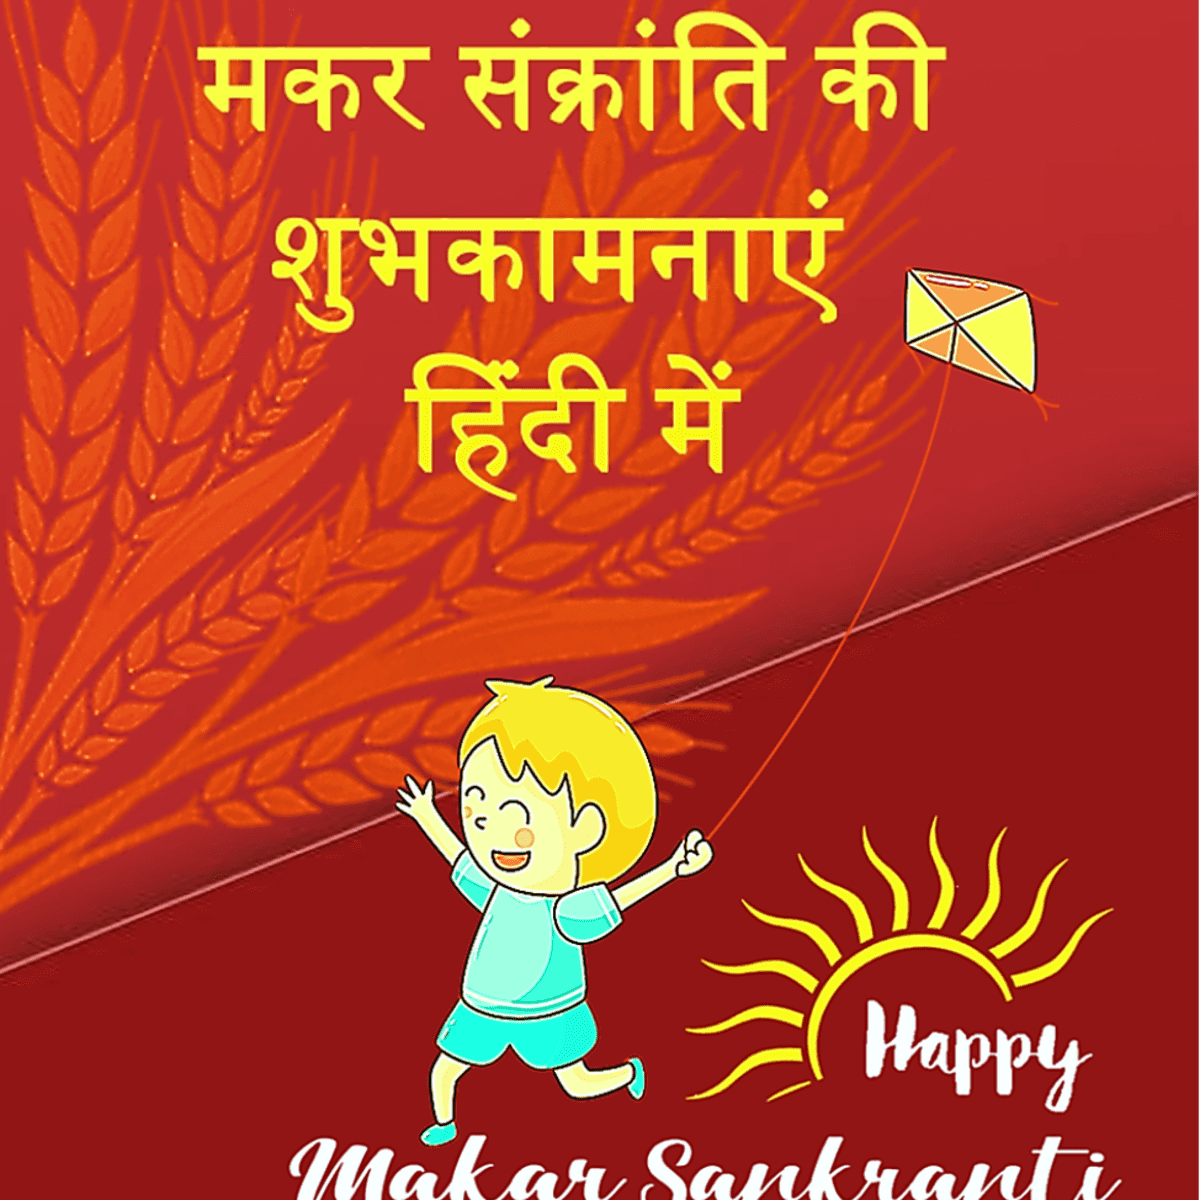 Happy Makar Sankranti Wishes and Greetings in Hindi Language ...